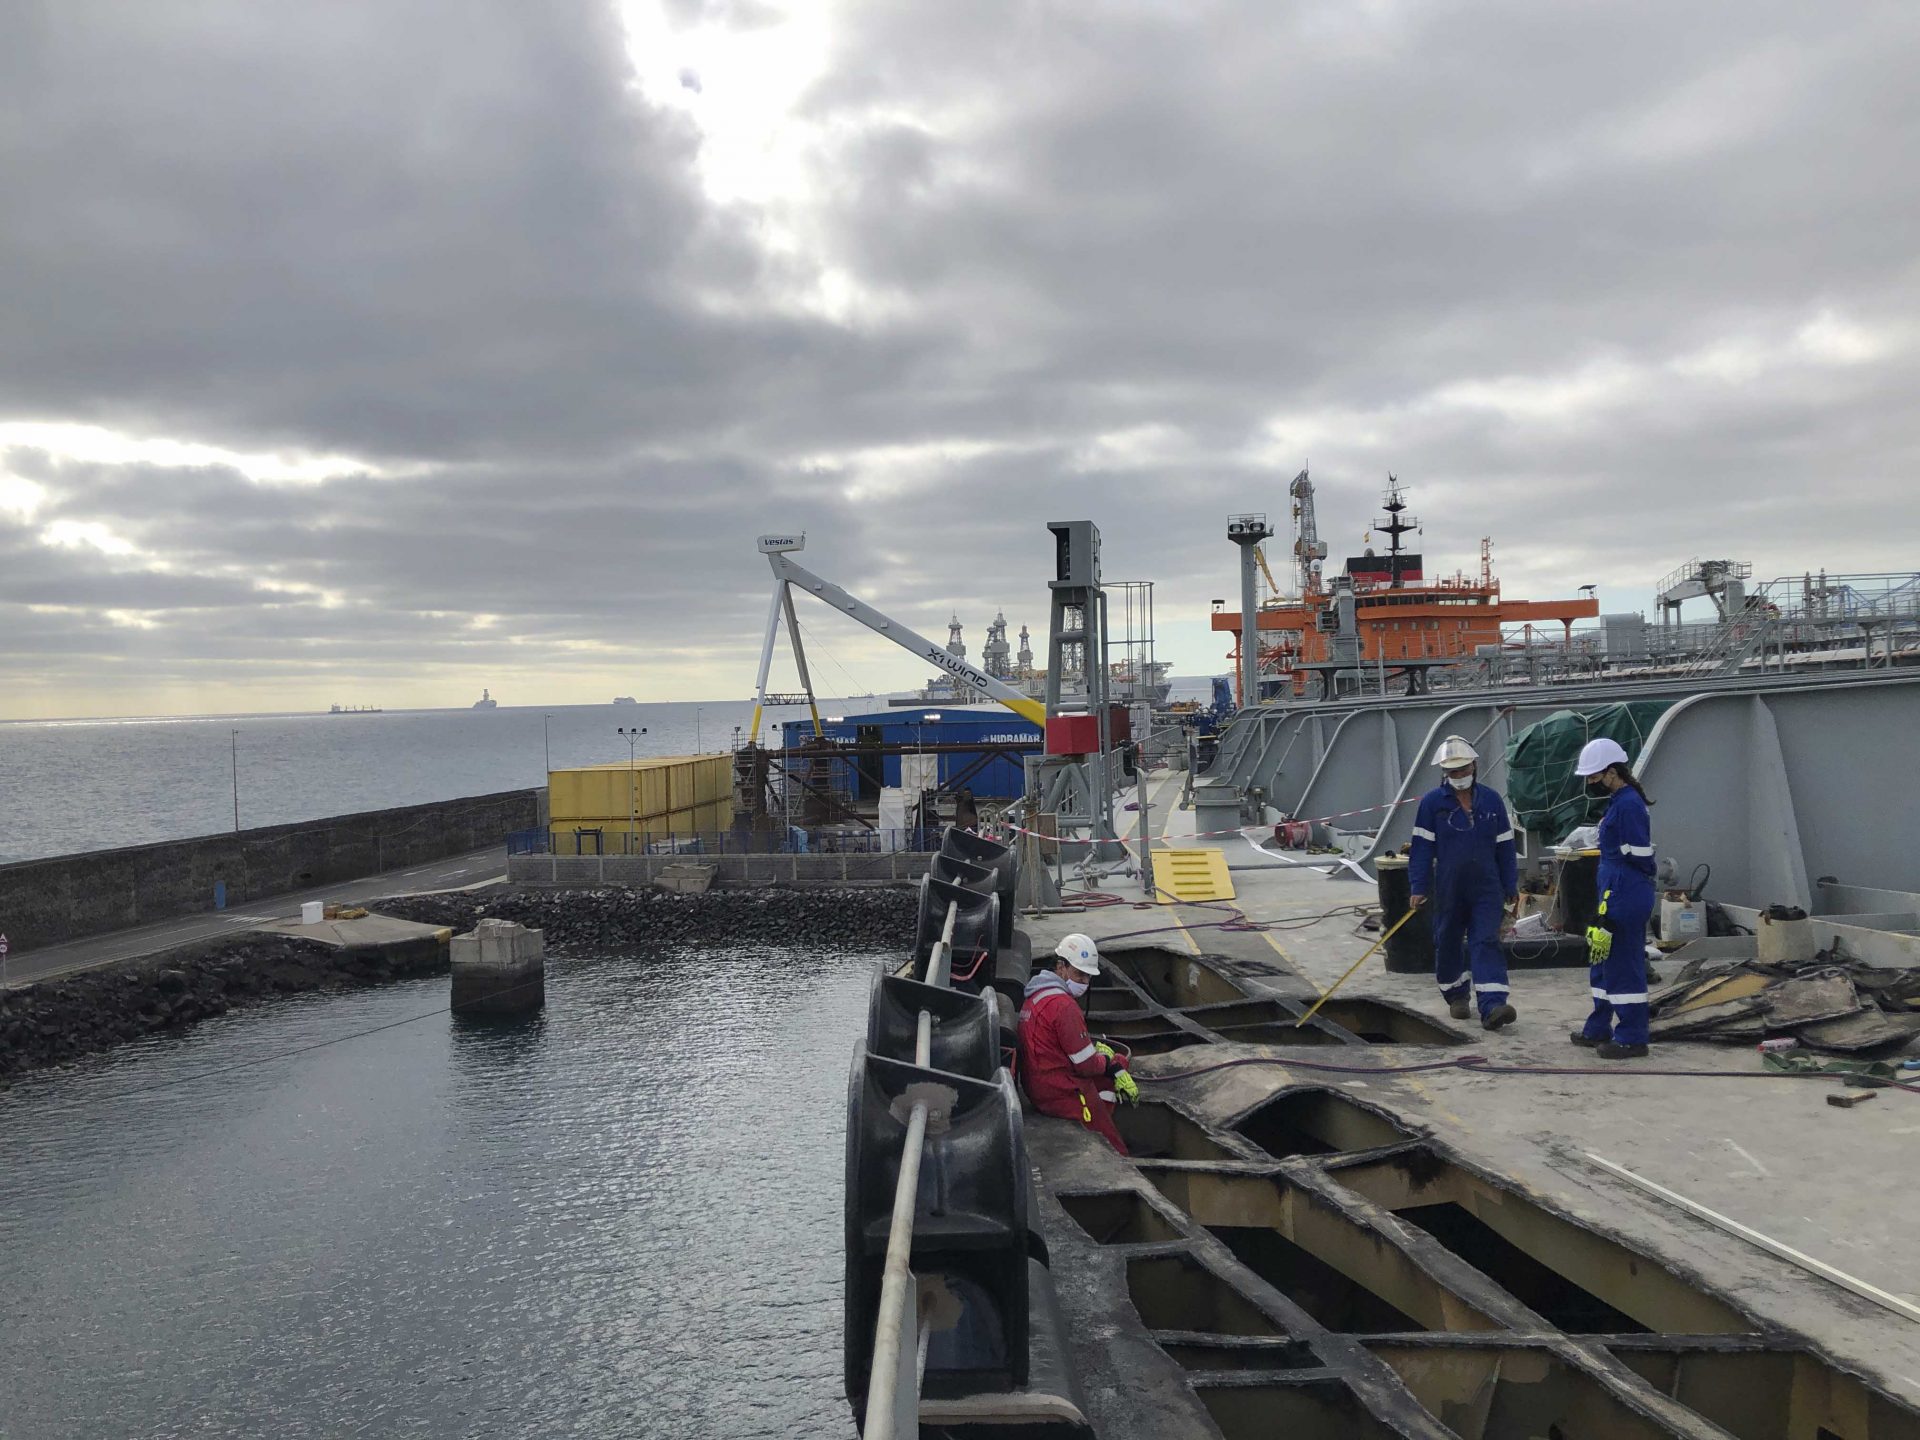 hidramar group takes on hull repair of a crude oil tanker vessel ship metal cutting 001 1